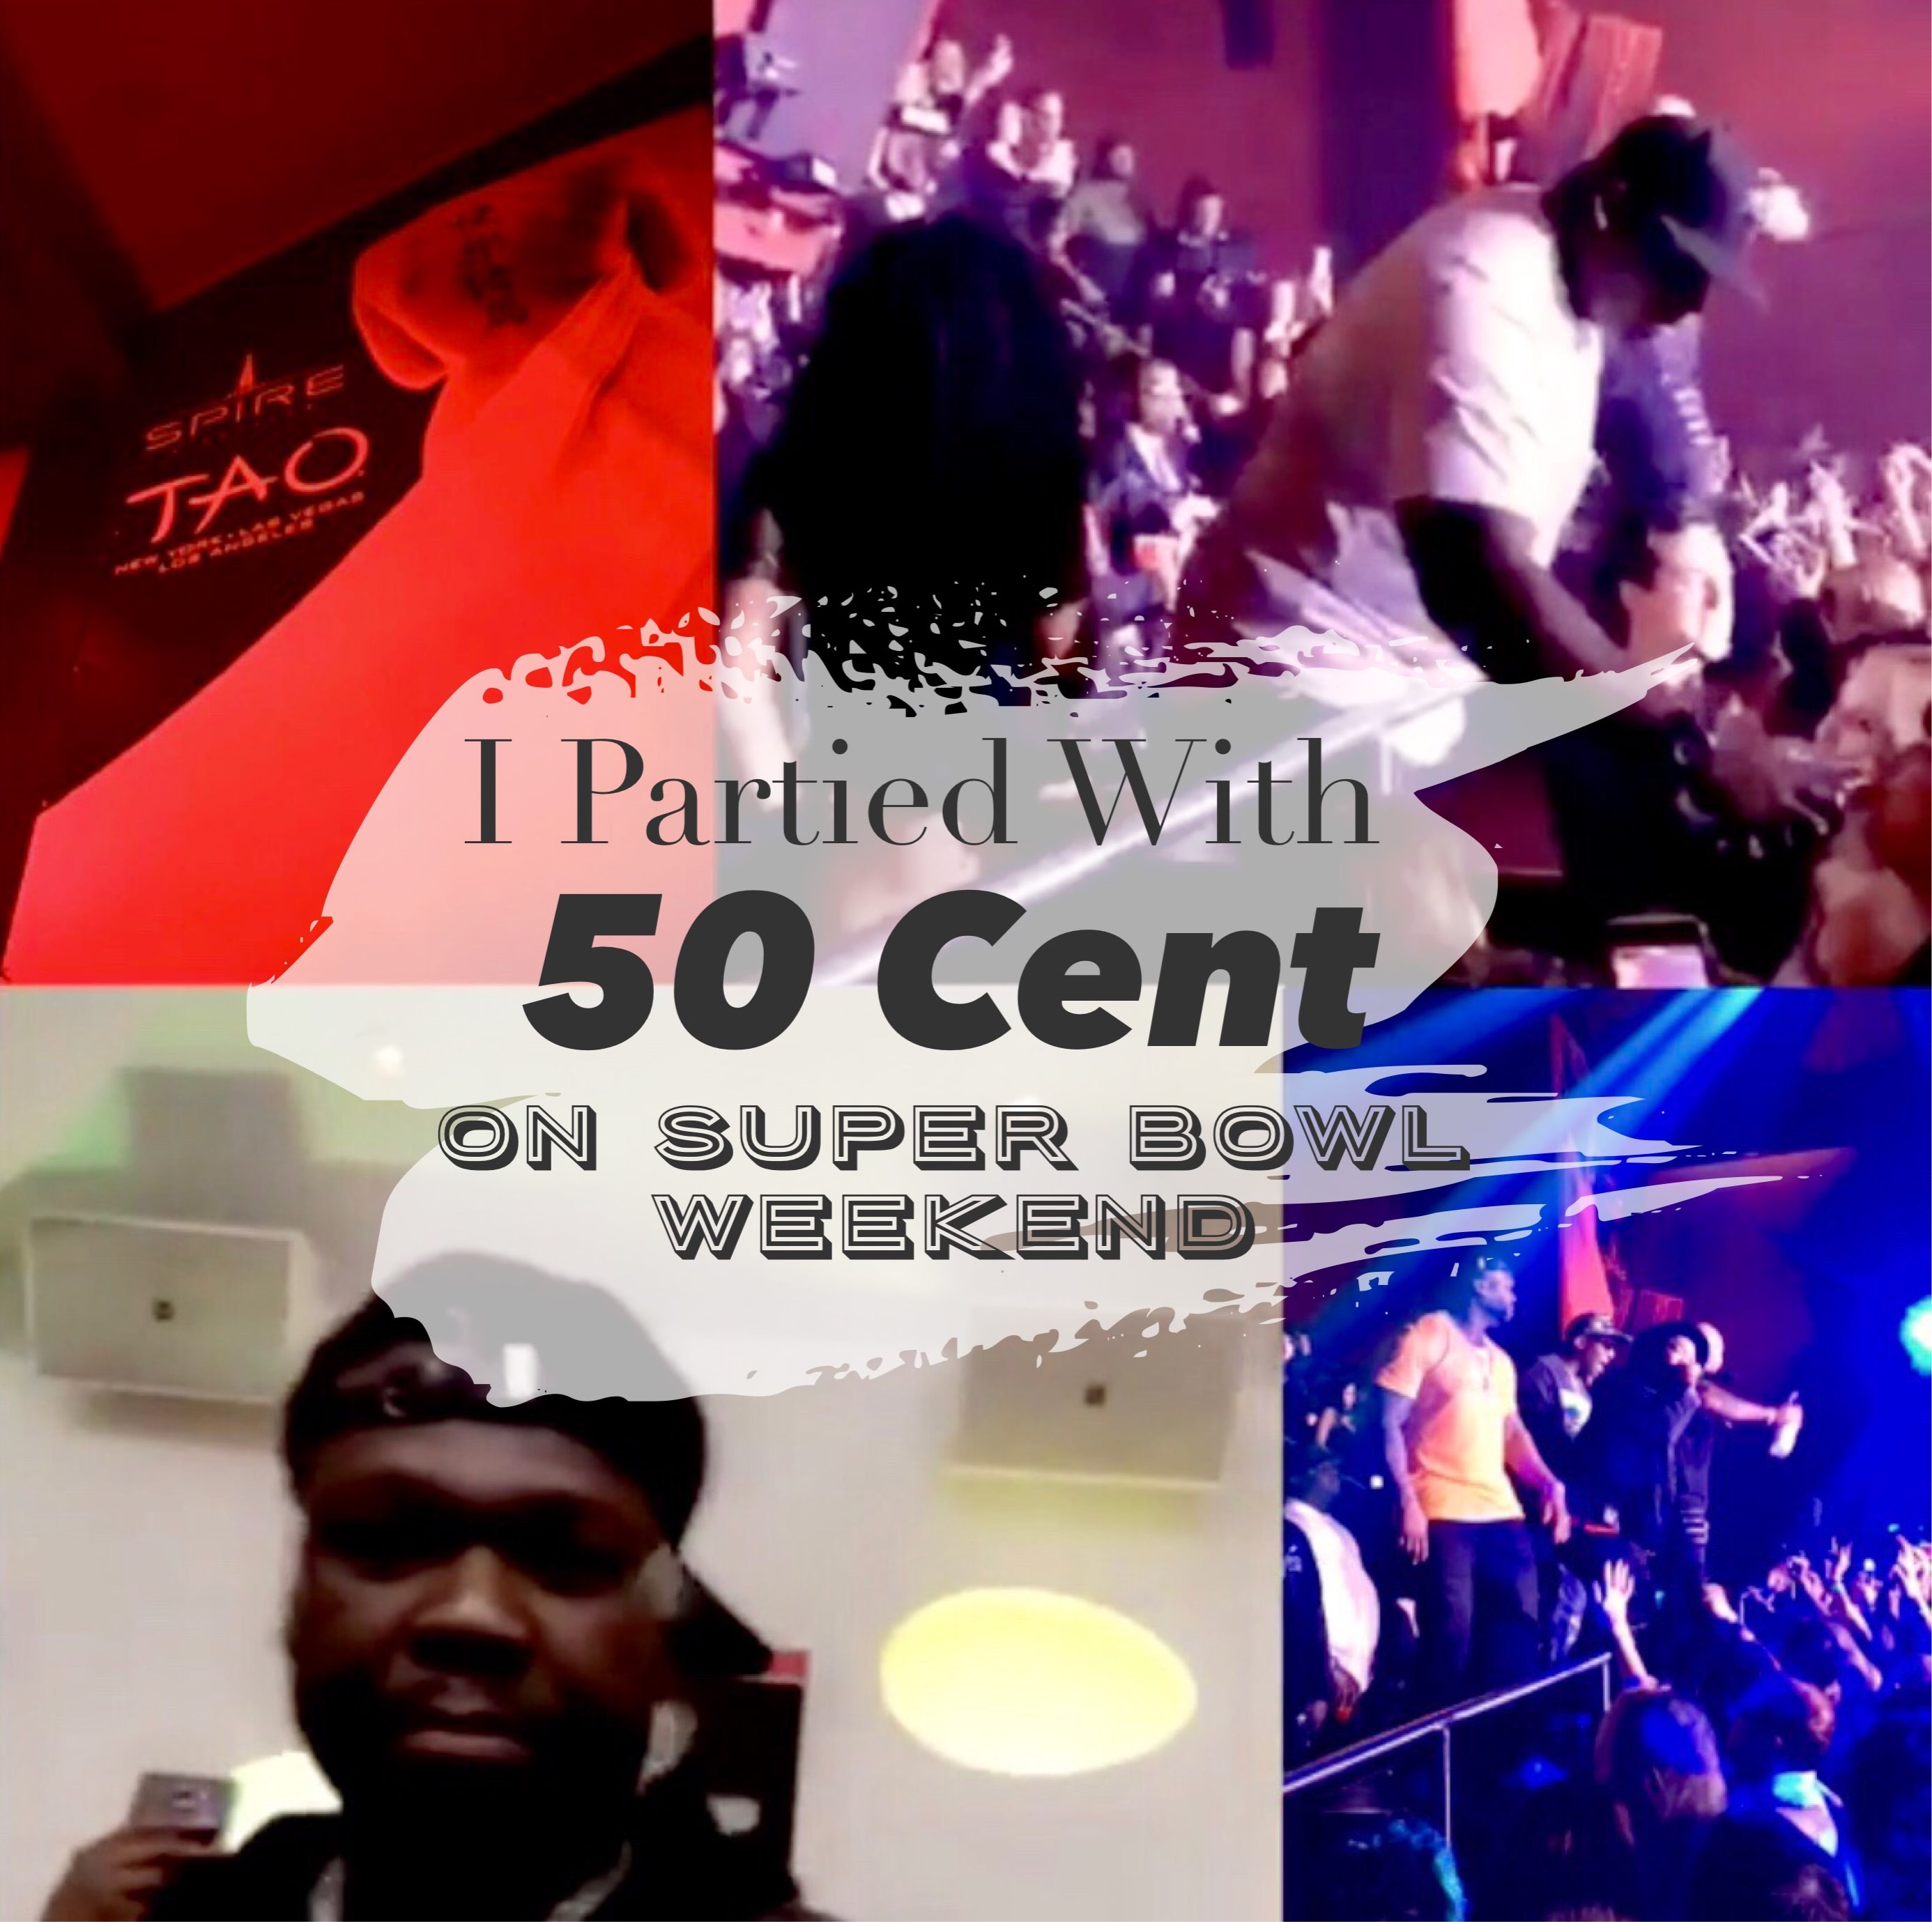 superbowl celebrity party 50 cent playboy maxim party houston atlanta ugandan blogger darkskin curvy lifestyle travel